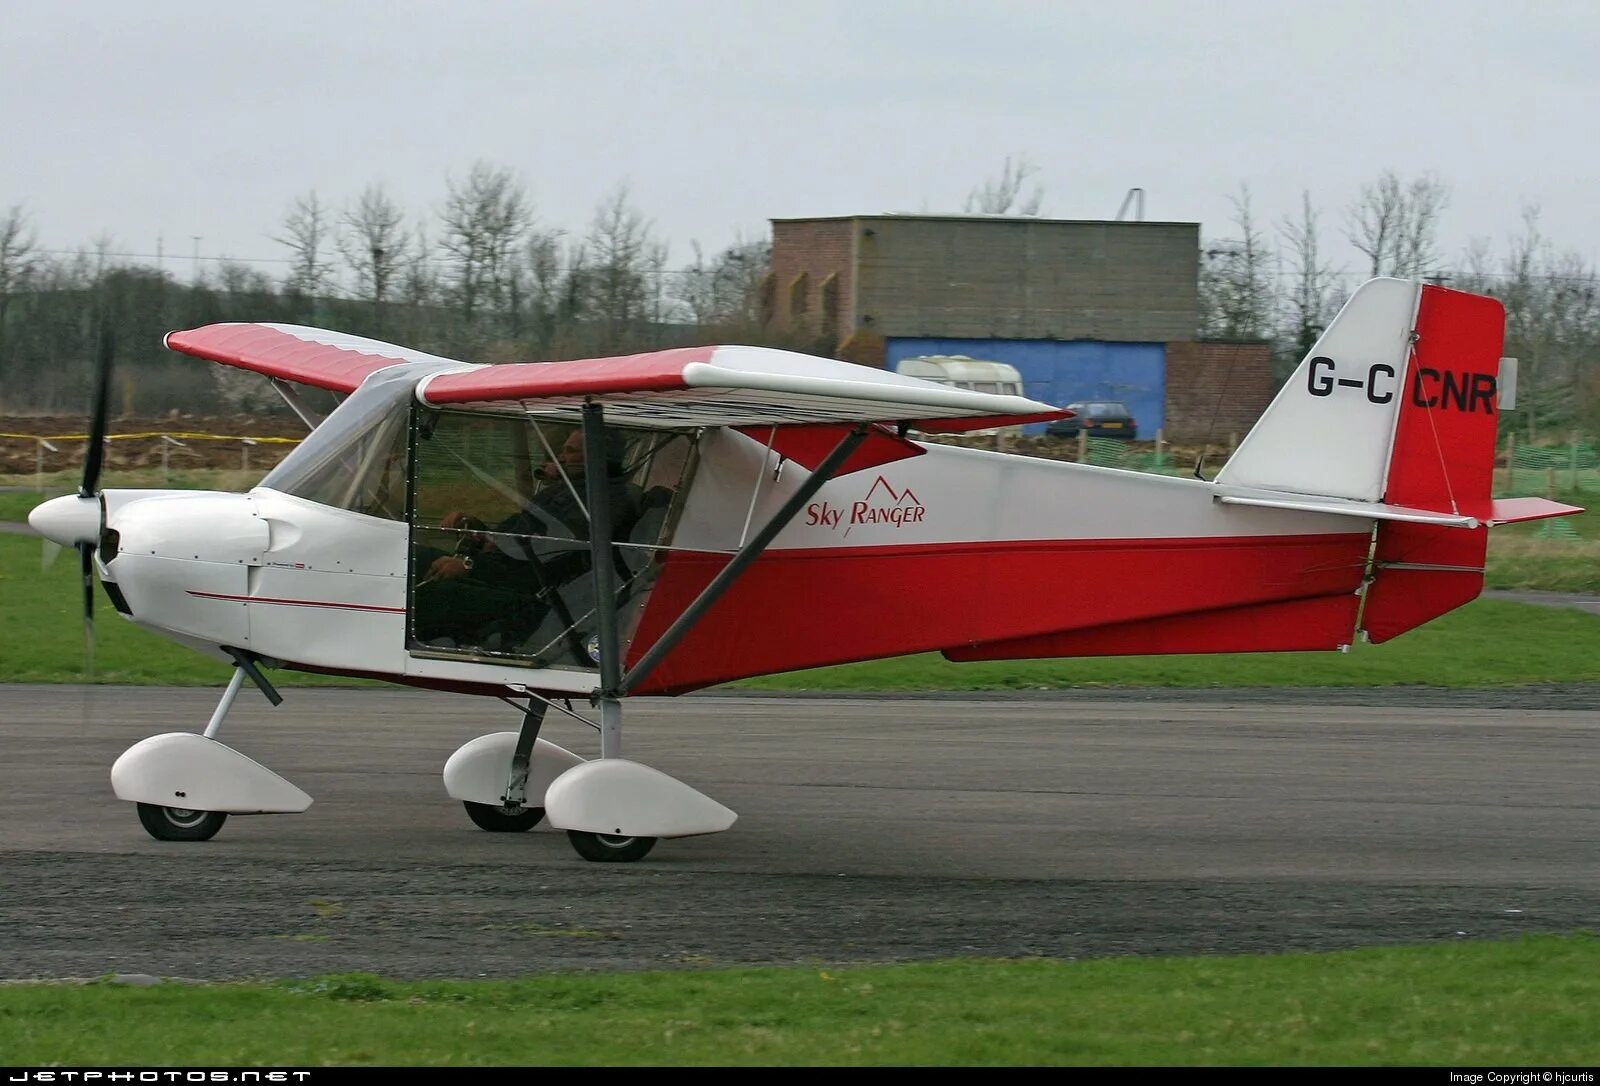 Skyranger самолет. Skyranger 912(2). Sky Ranger легкий одномоторный. Скай рейнджер самолет. Sky ranger